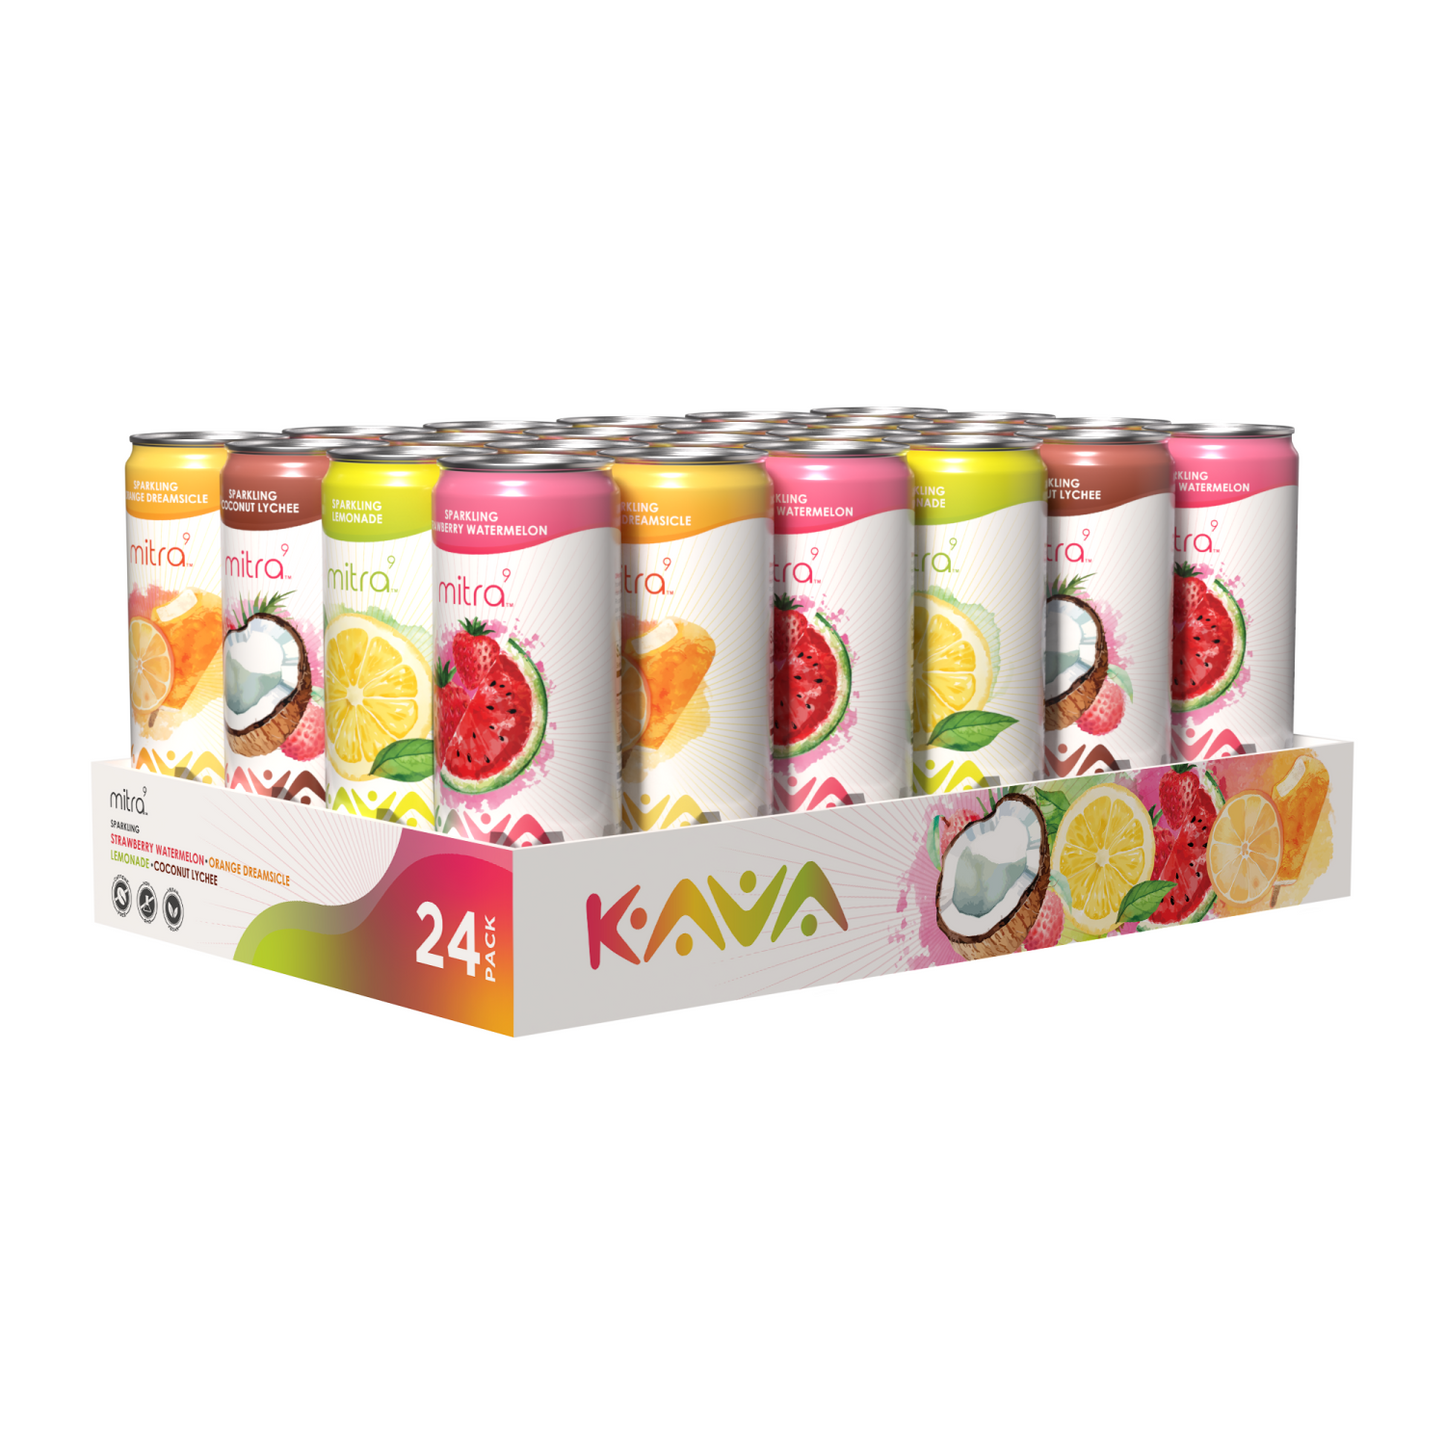 Kava Variety Pack